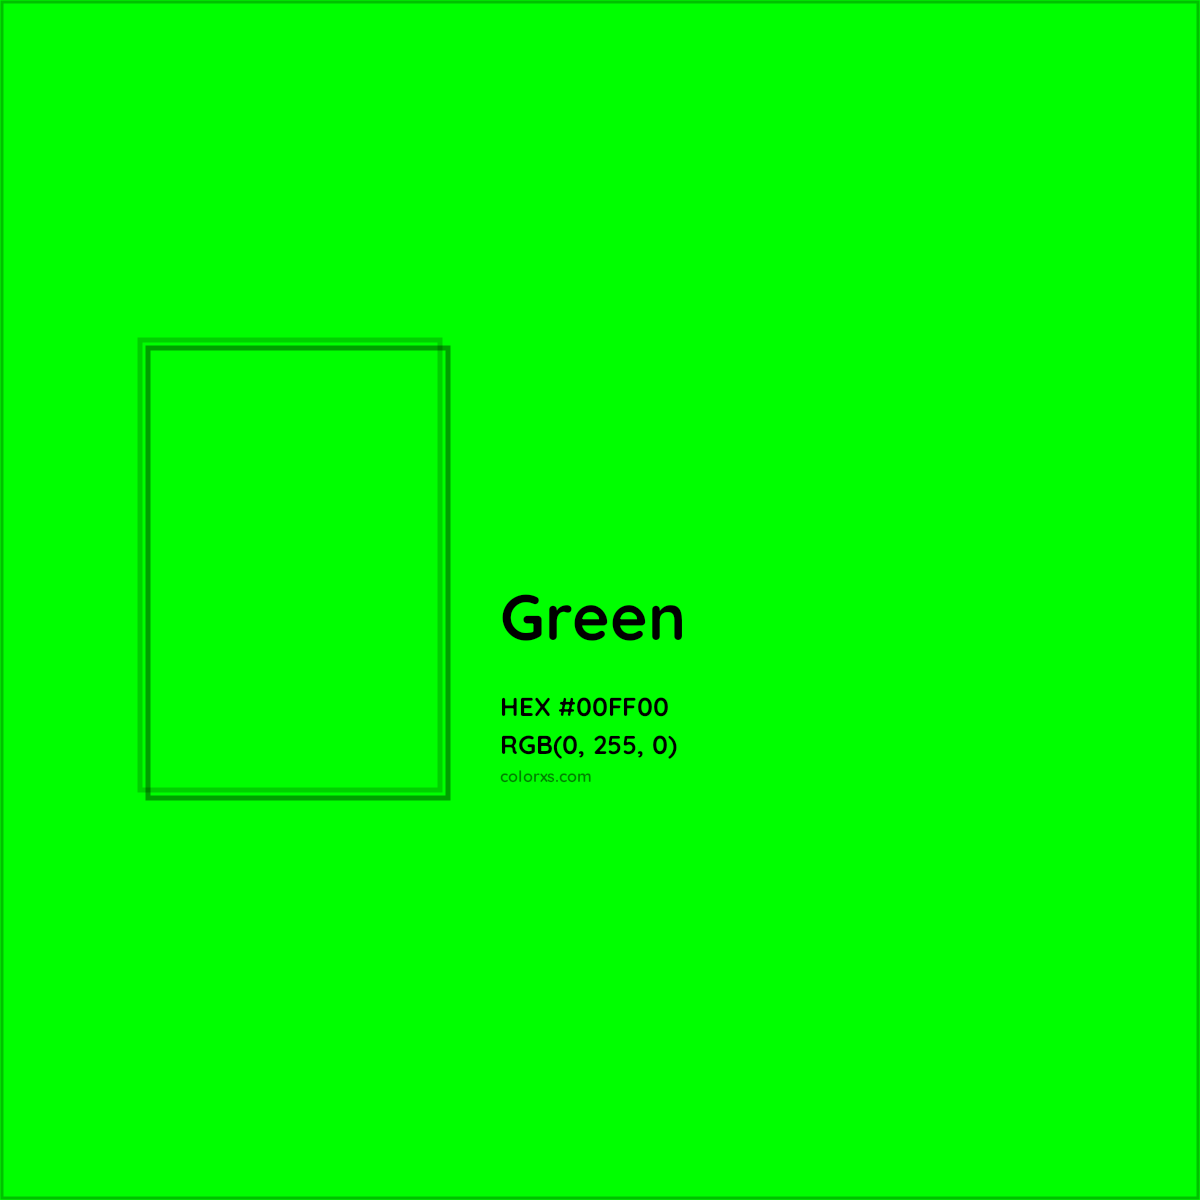 HEX #00FF00 Green Color - Color Code